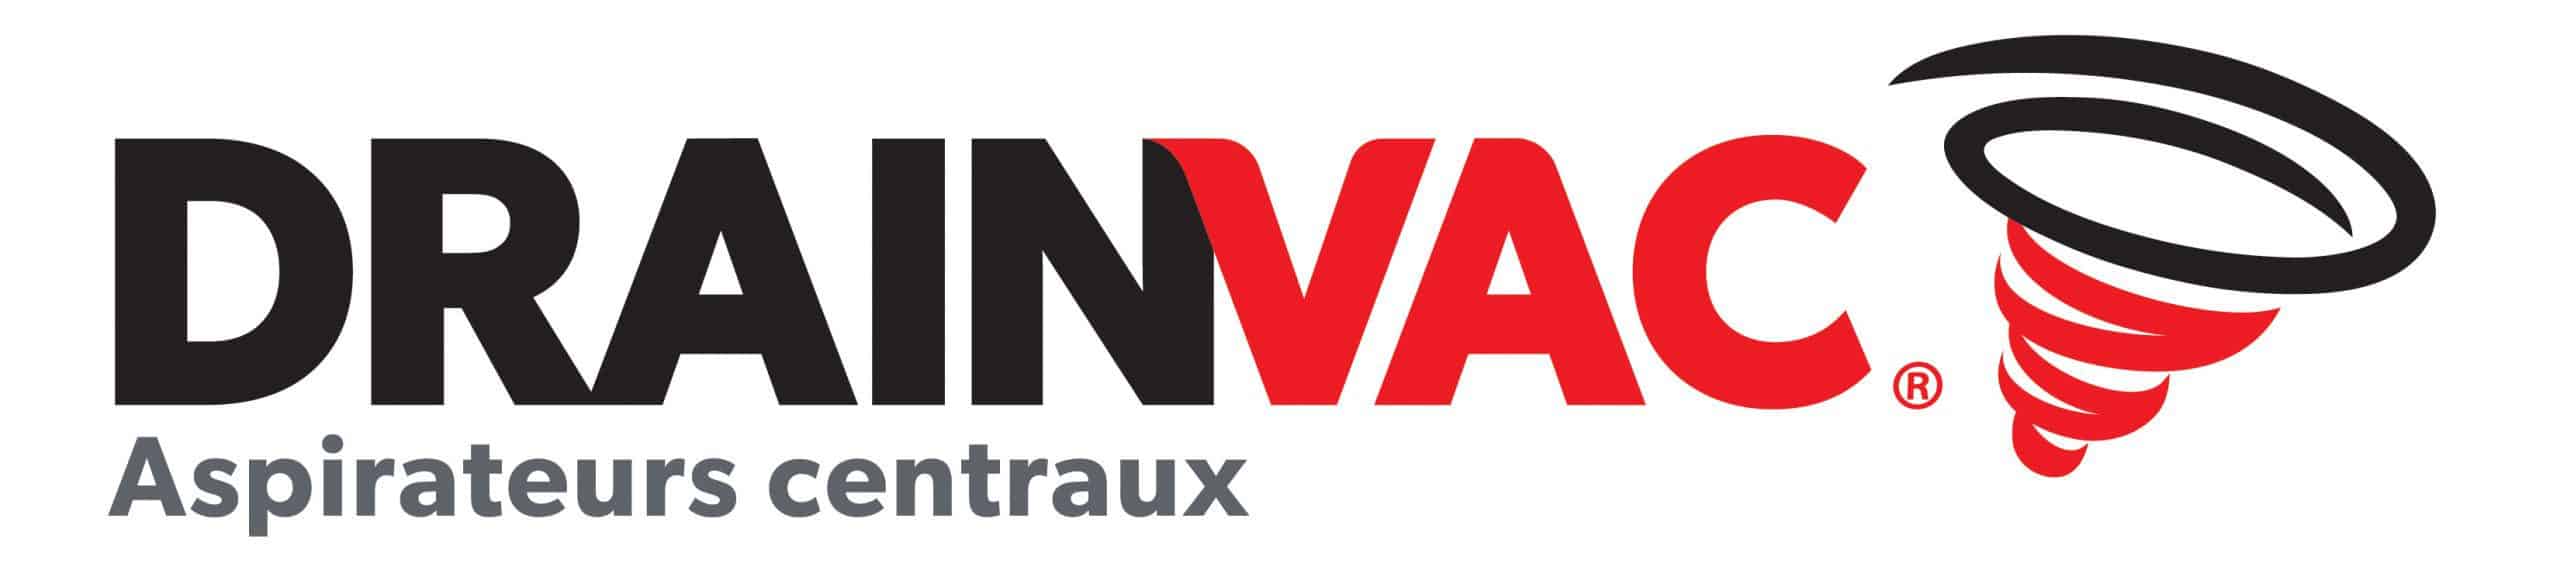 Drainvac Logo Res FR2